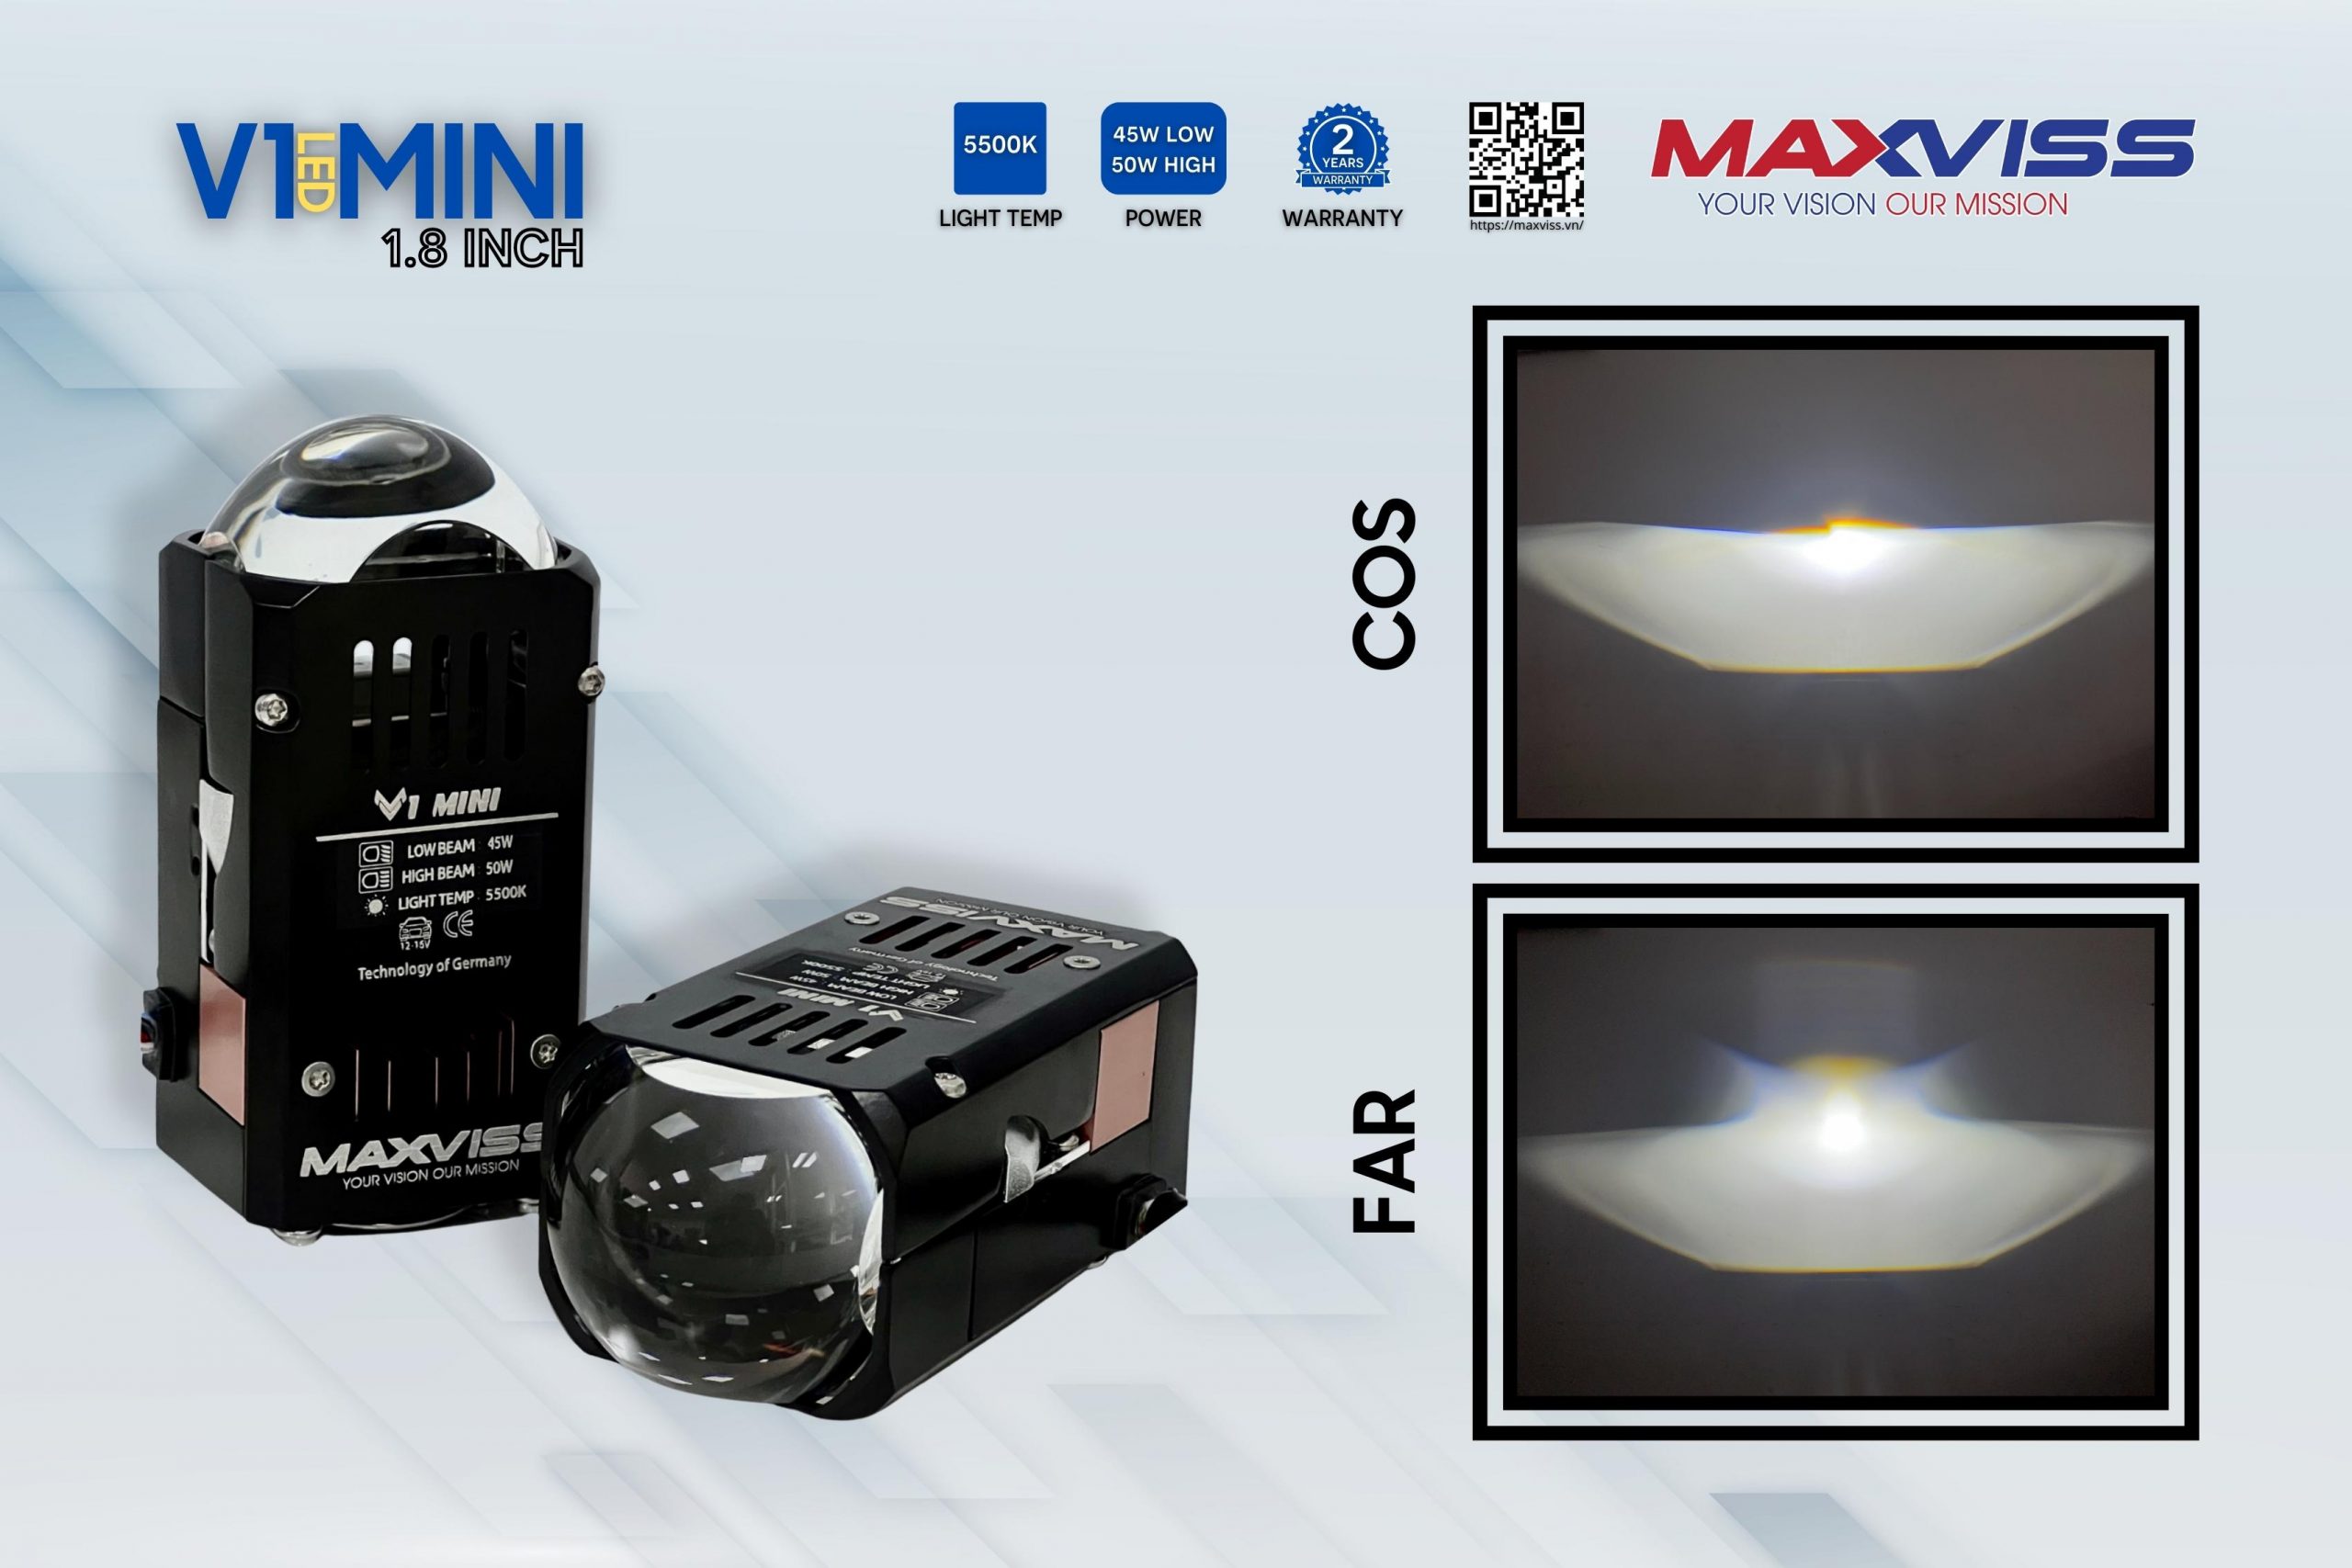 BI LED MAXVISS V1 MINI